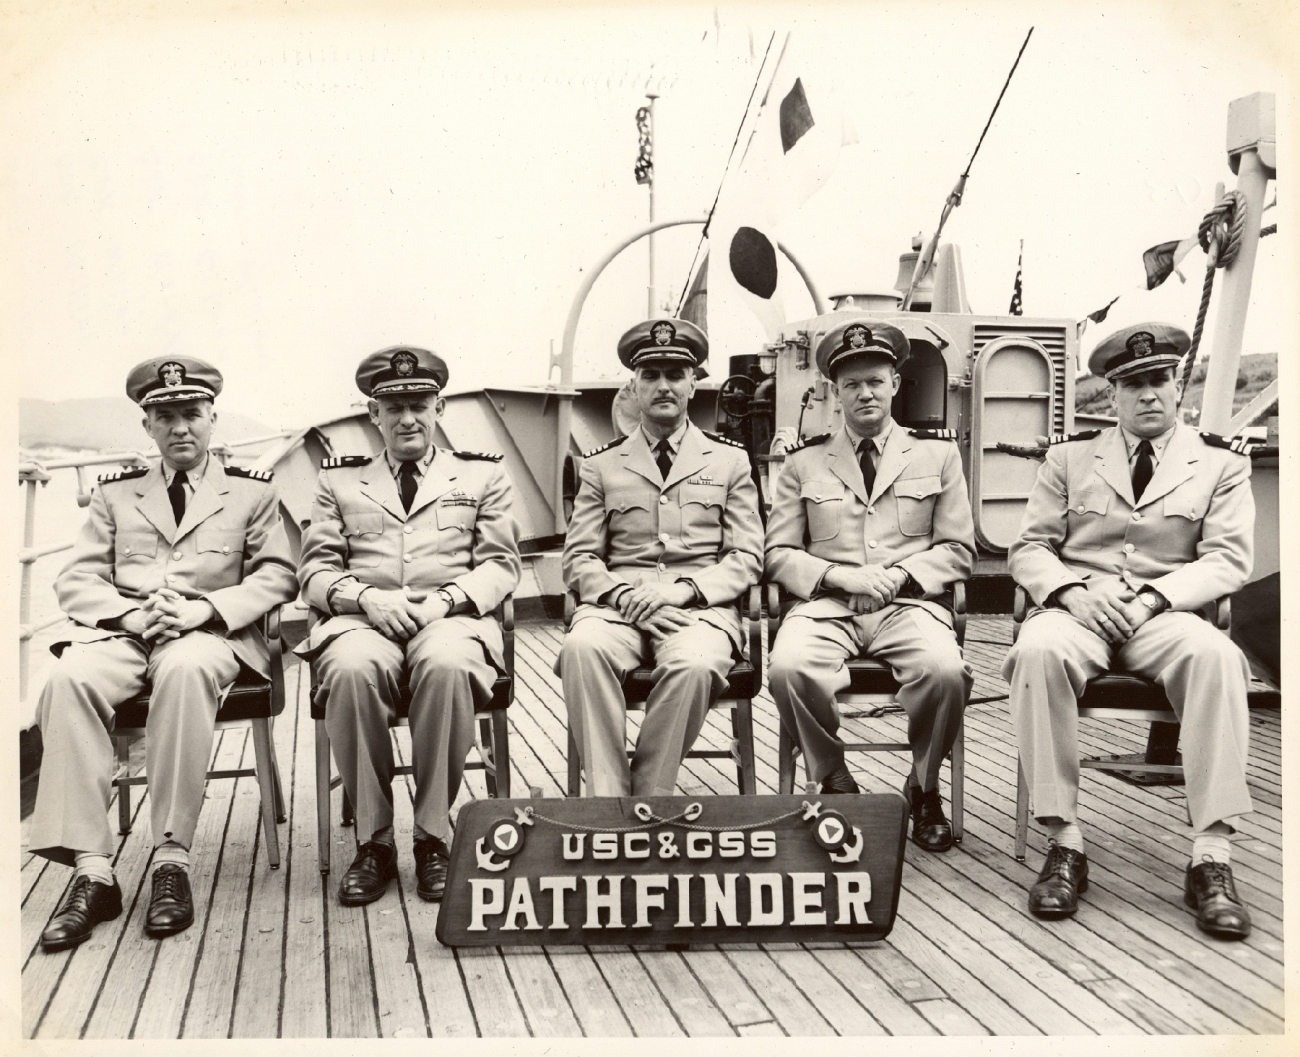 Commander John Phillips, Commander David Whipp, Captain Wardwell, CME Gilgan,and Lieutenant Commander Williams